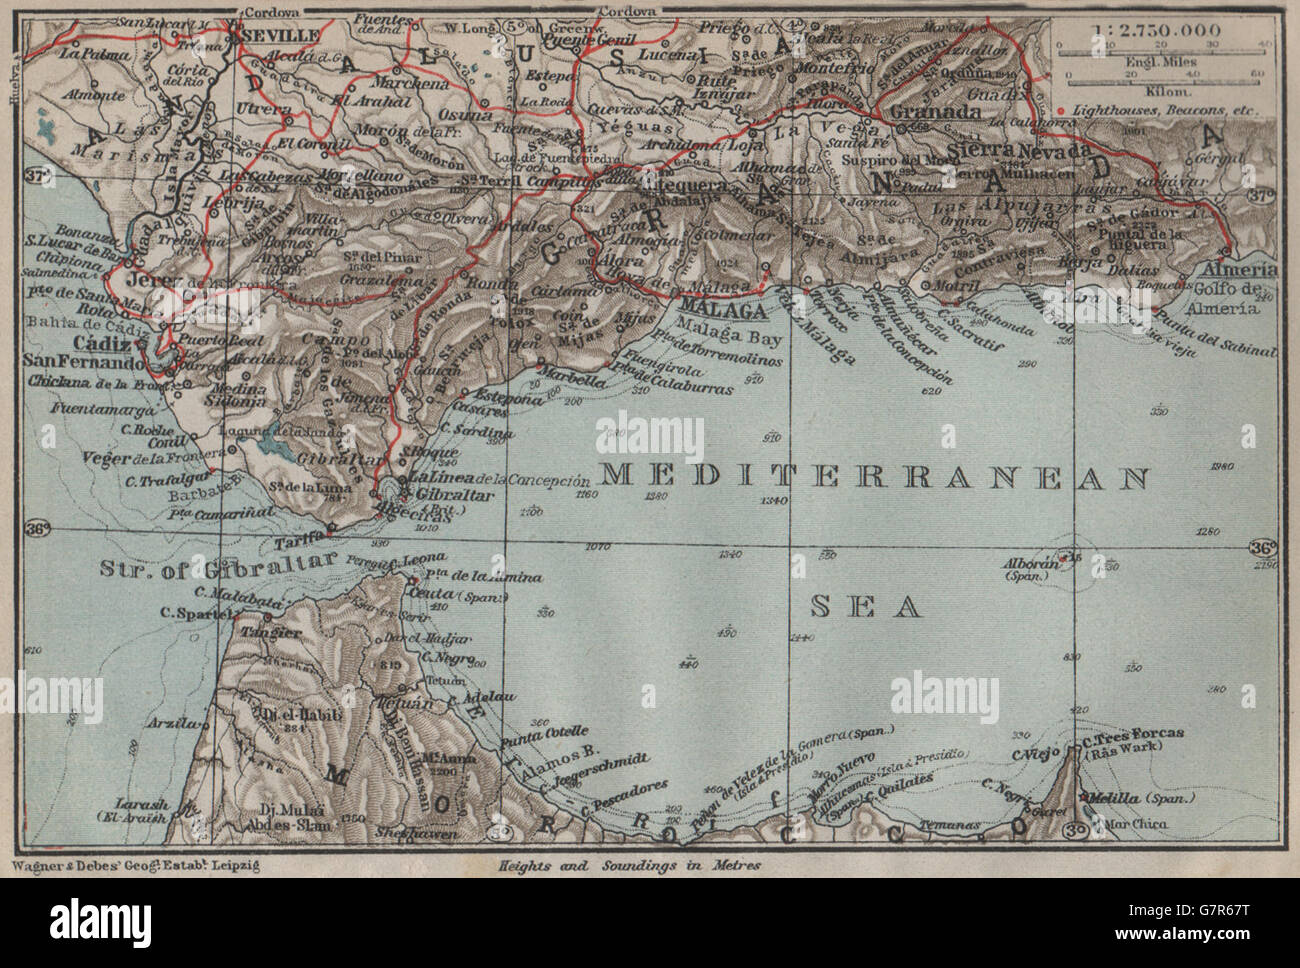 STRAIT OF GIBRALTAR. Andalusia Ceuta Cadiz Pillars of Hercules Spain, 1911 map Stock Photo